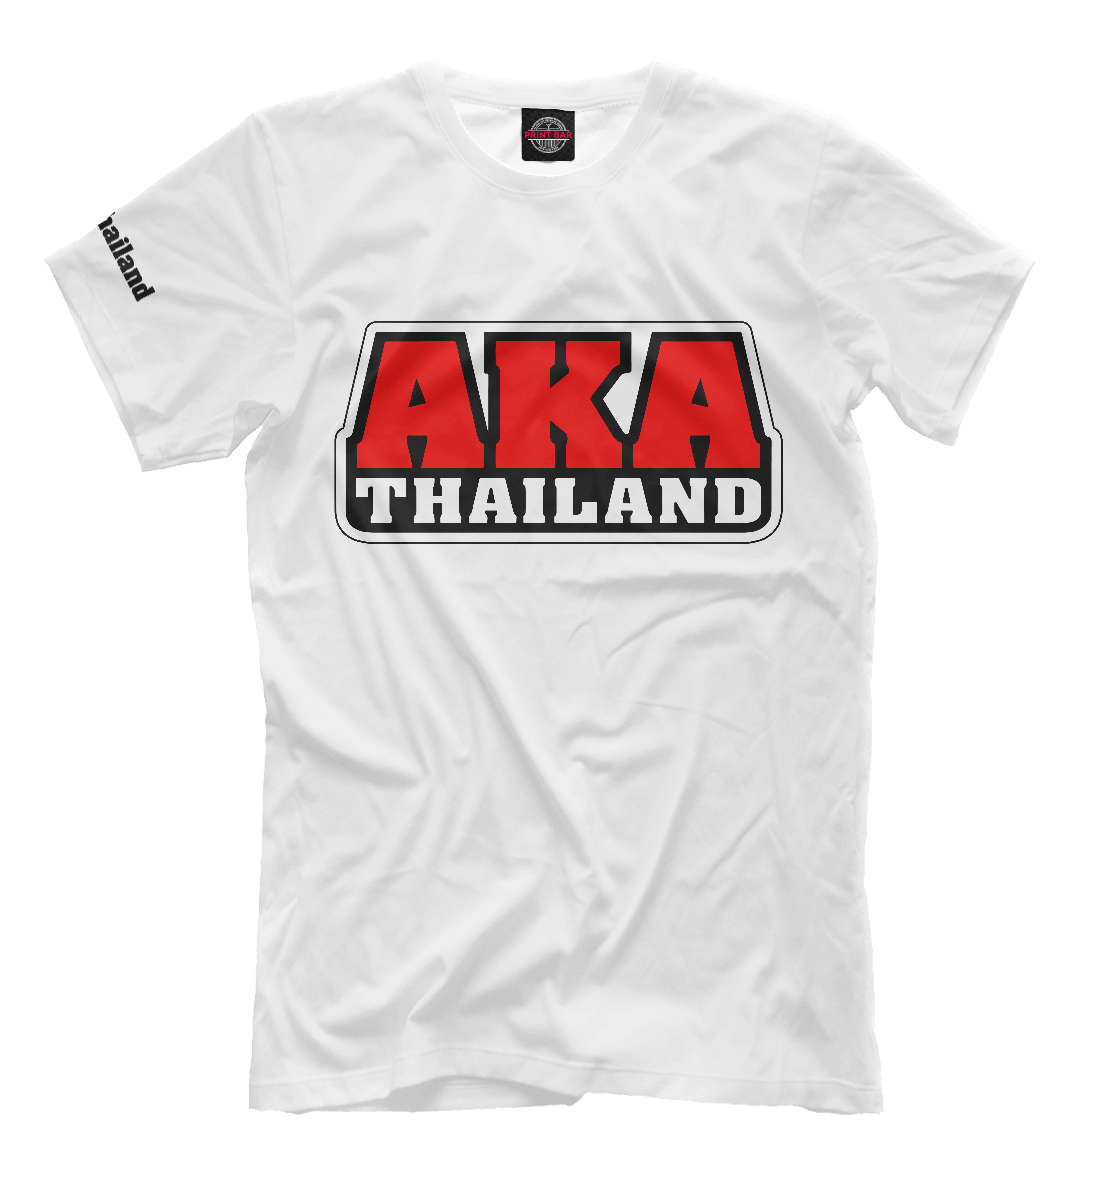 Aka thailand футболка